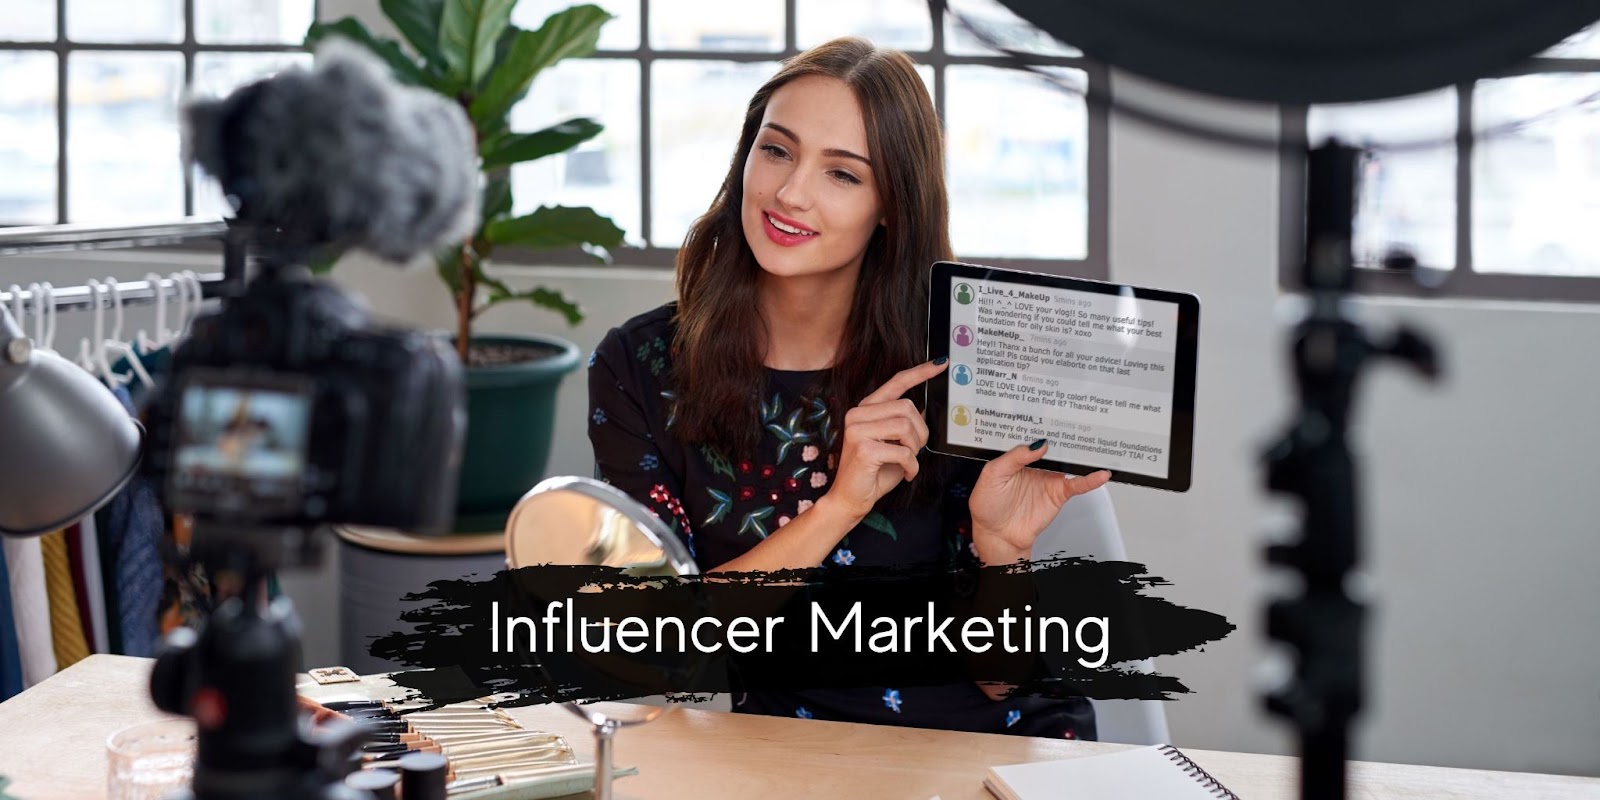  influencer marketing